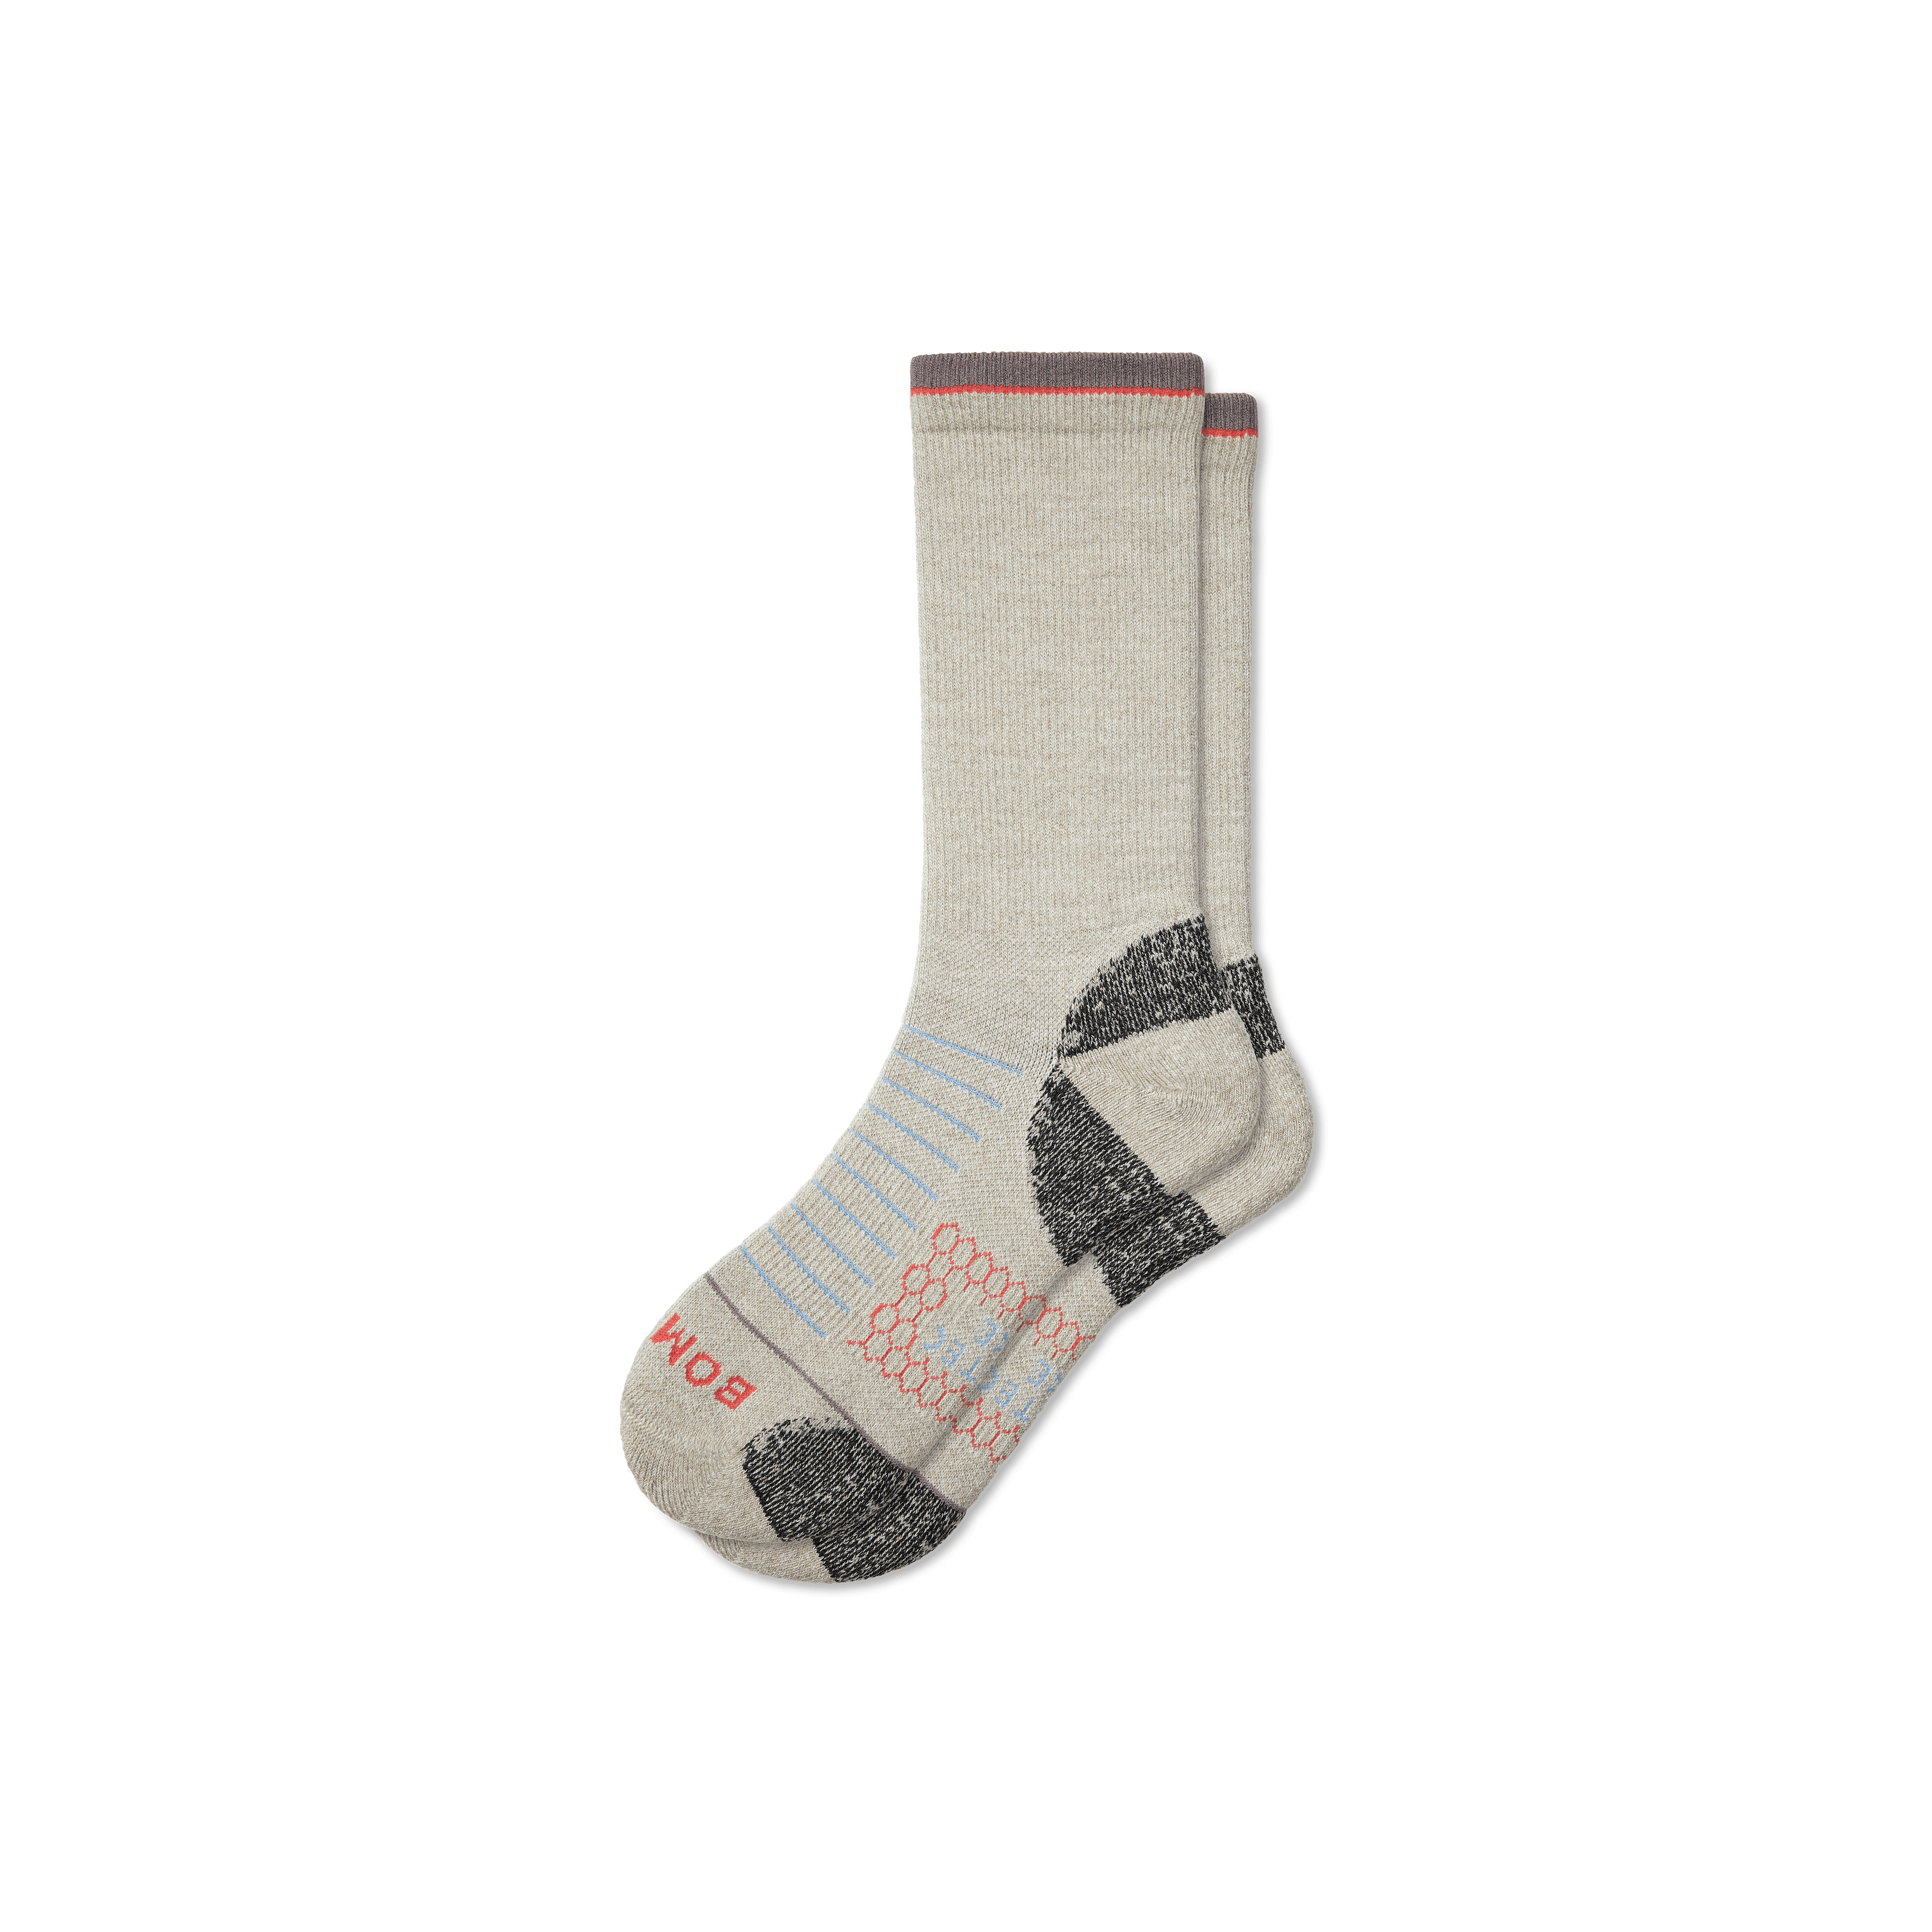 Bombas Merino Wool Blend Hiking Performance Calf Socks In Washed Taupe